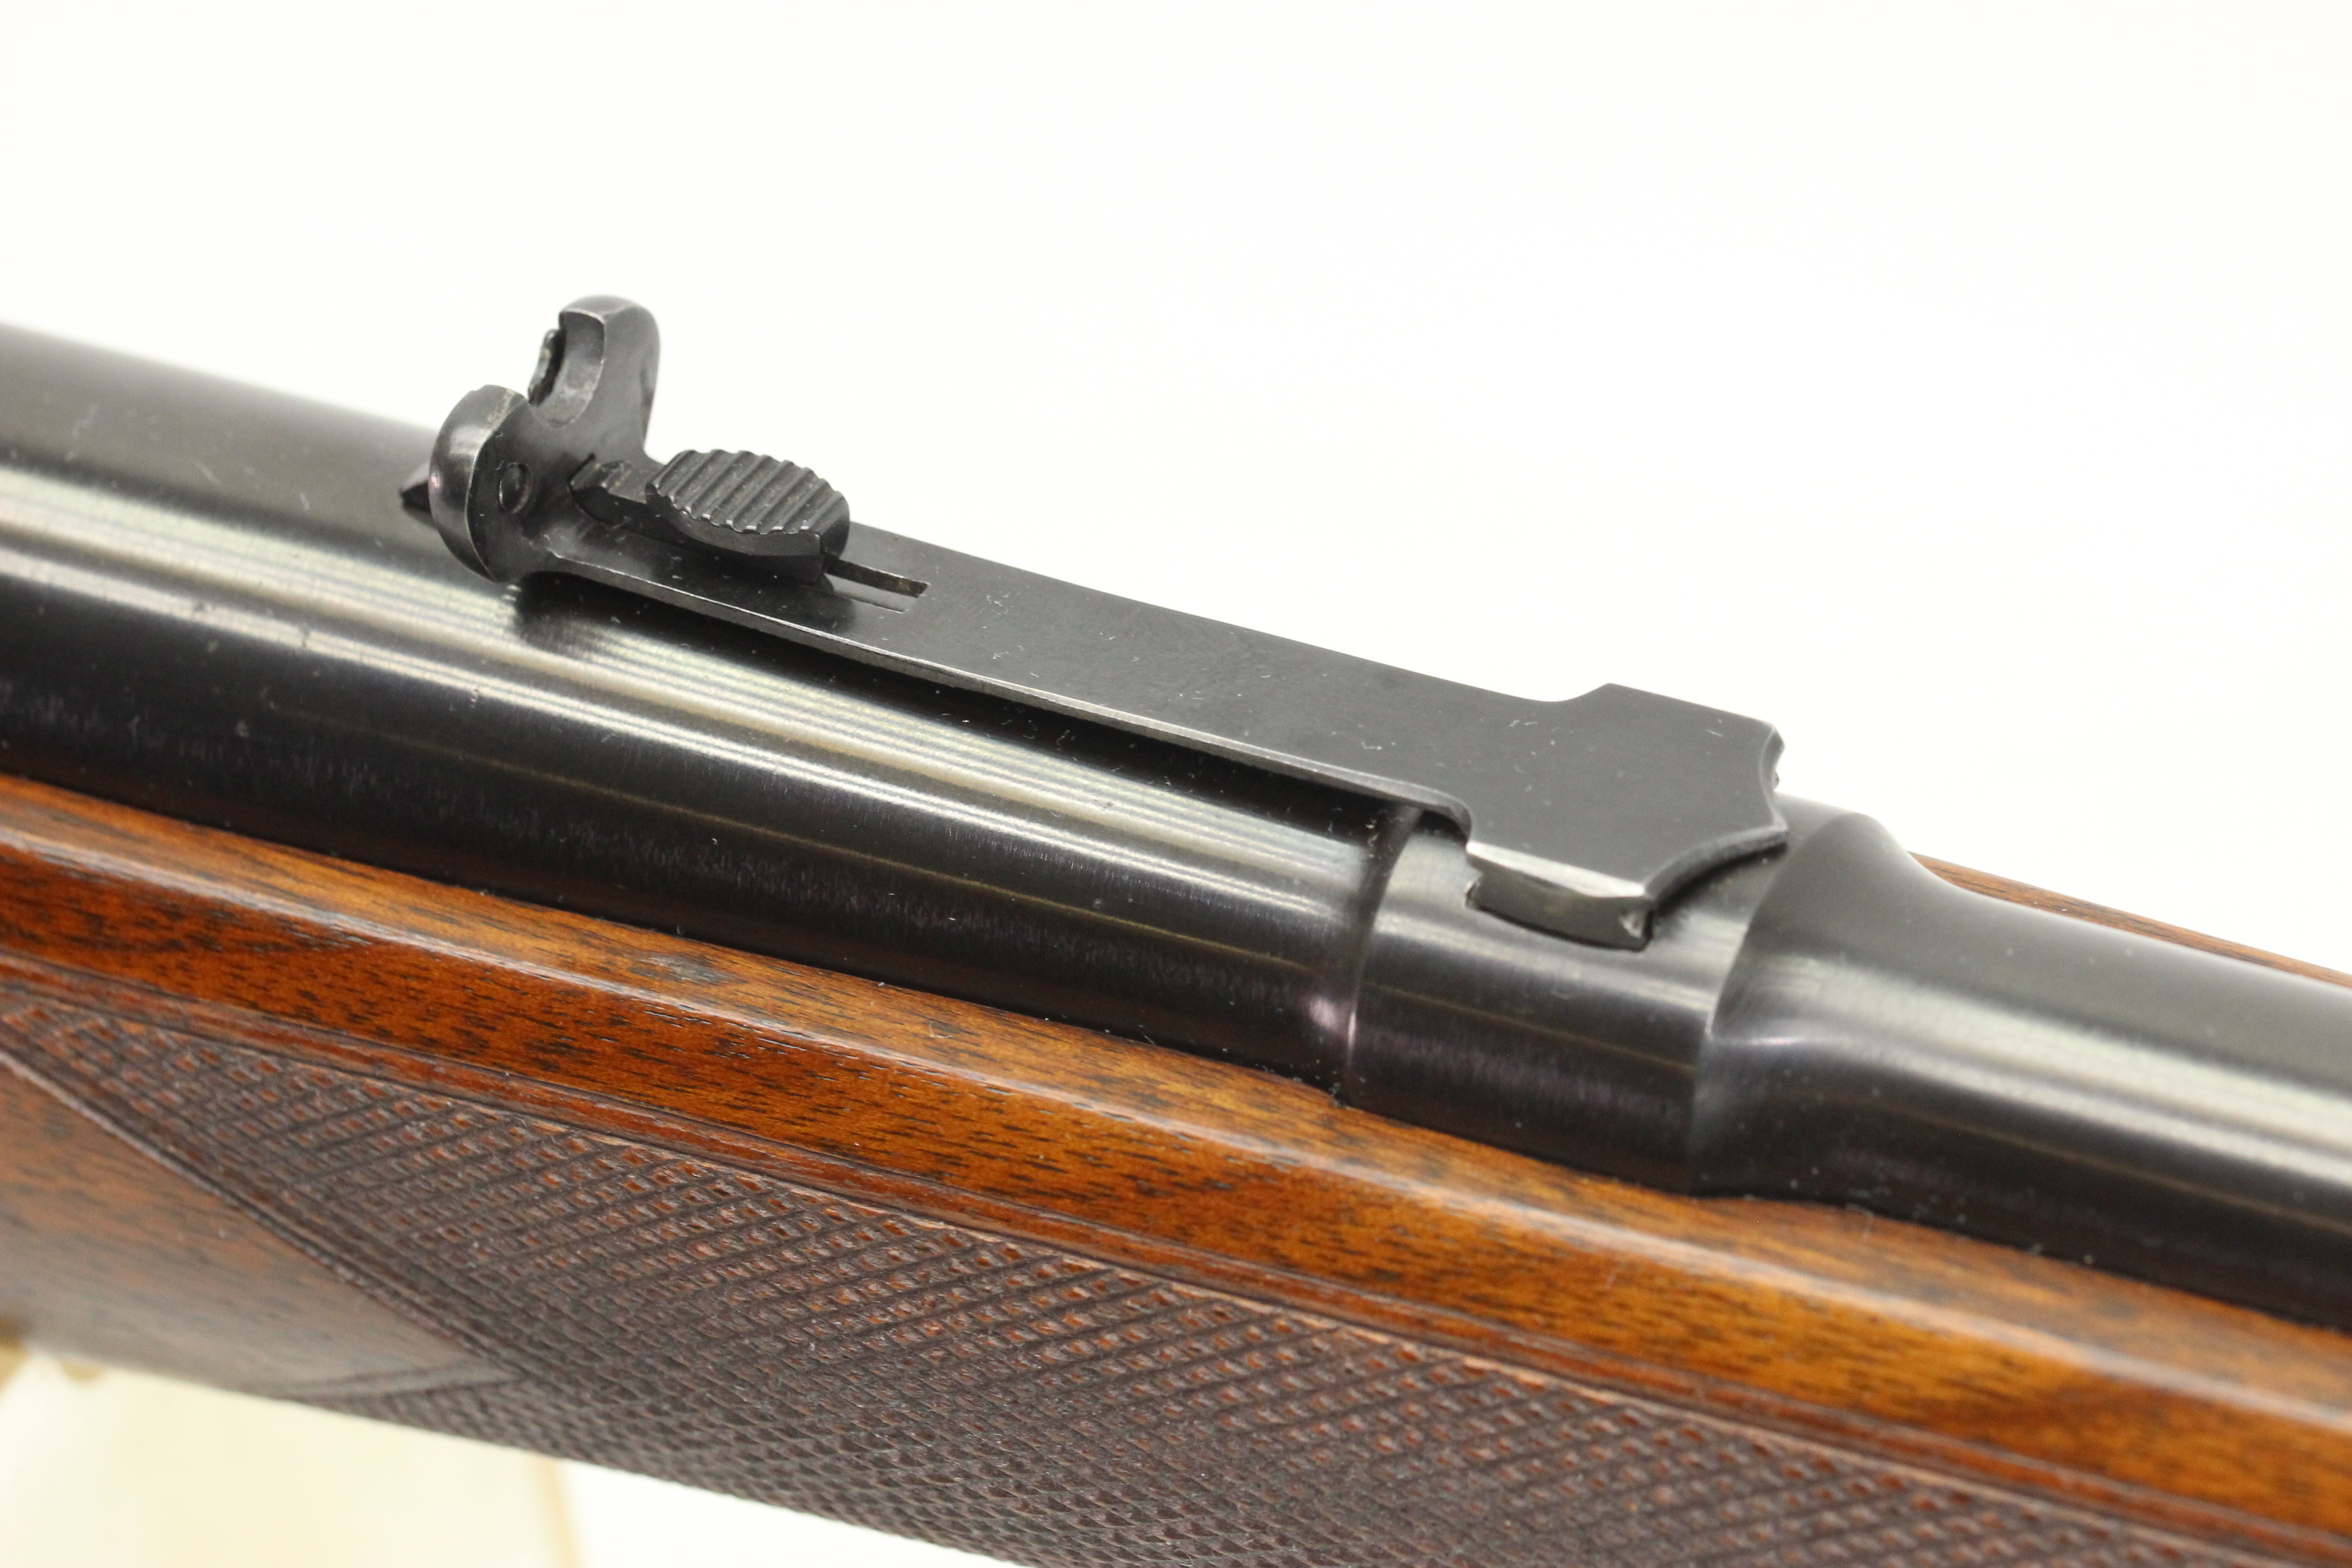 .22 Hornet Standard Rifle - 1951